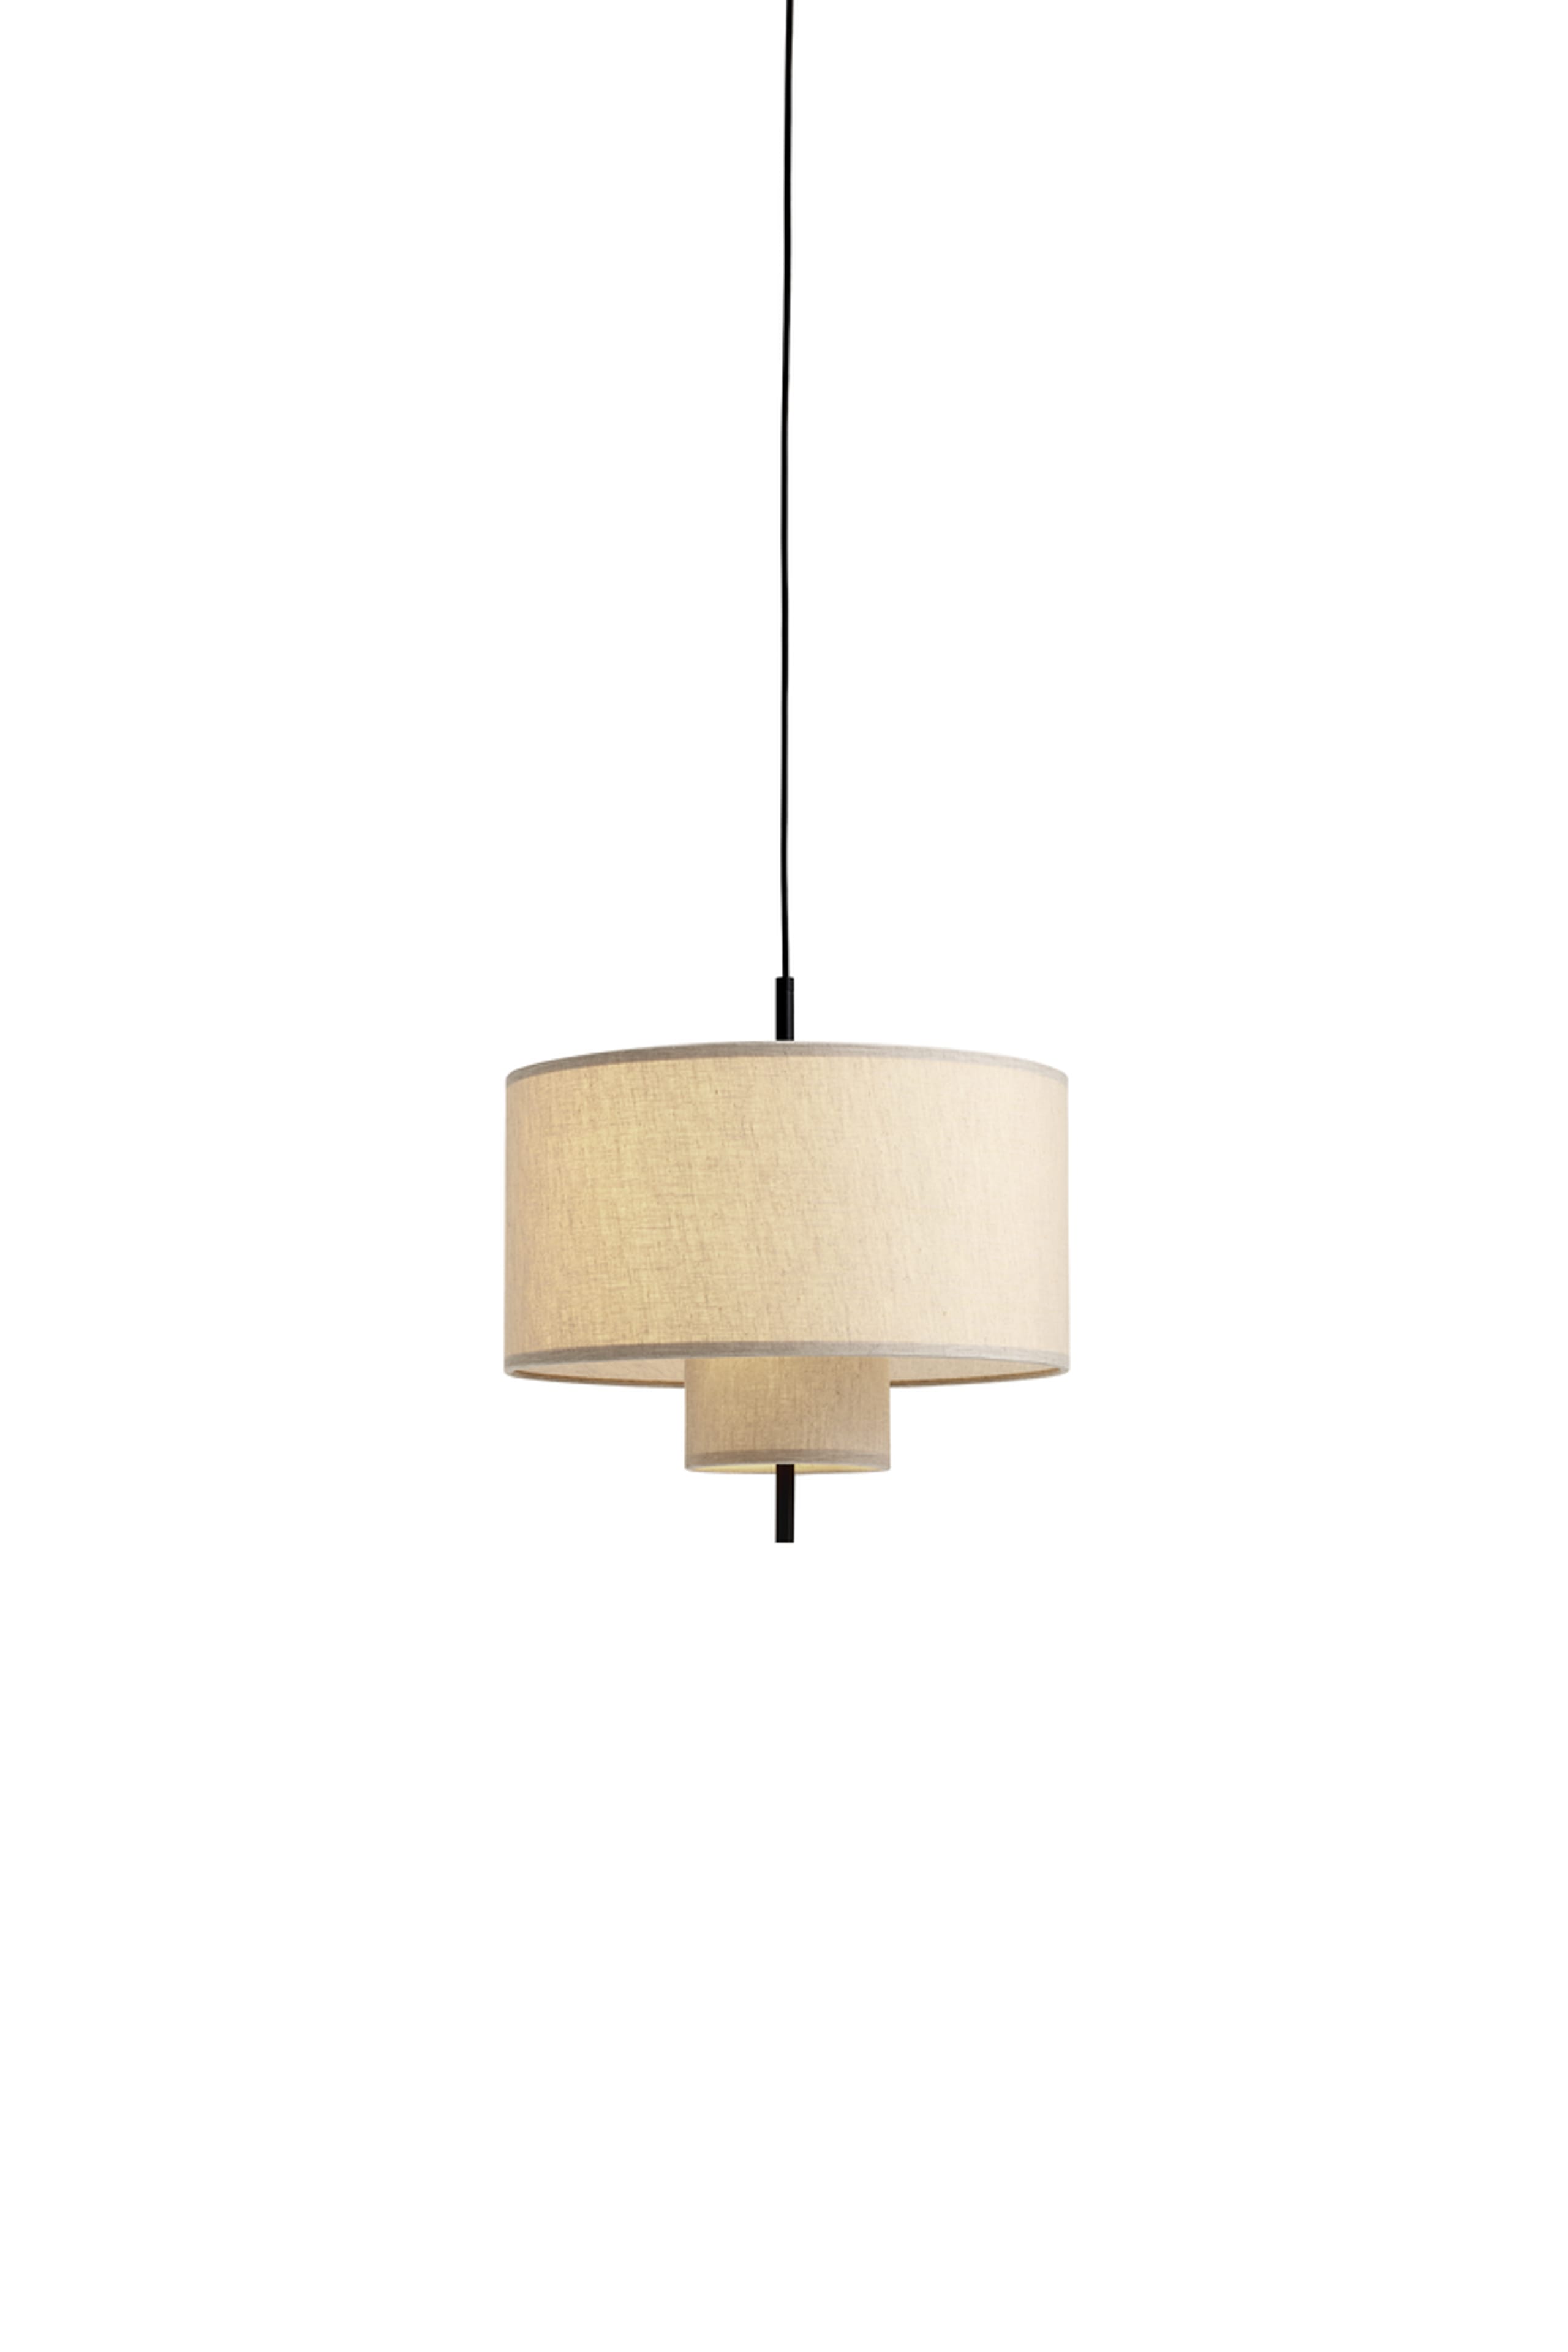 New Works - Lampe - Margin pendant lamp - Beige - Ø50